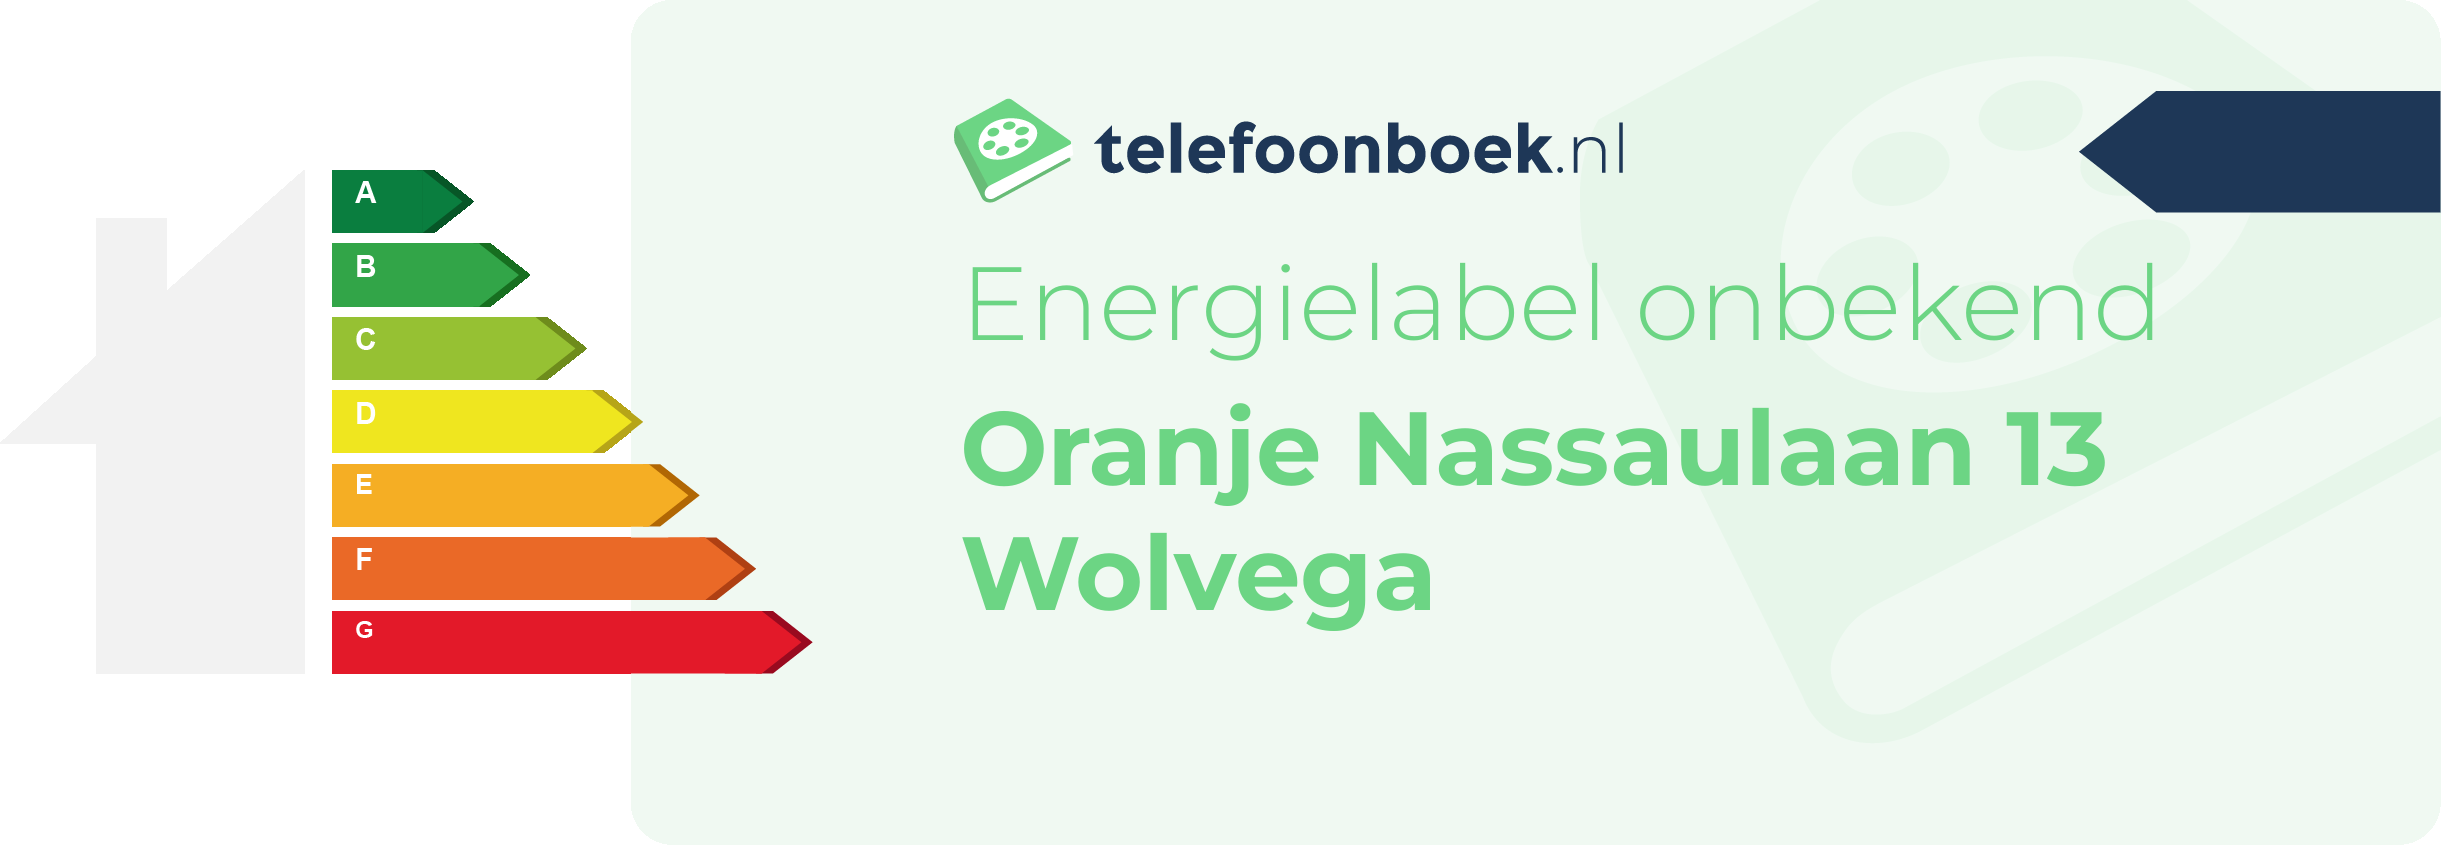 Energielabel Oranje Nassaulaan 13 Wolvega